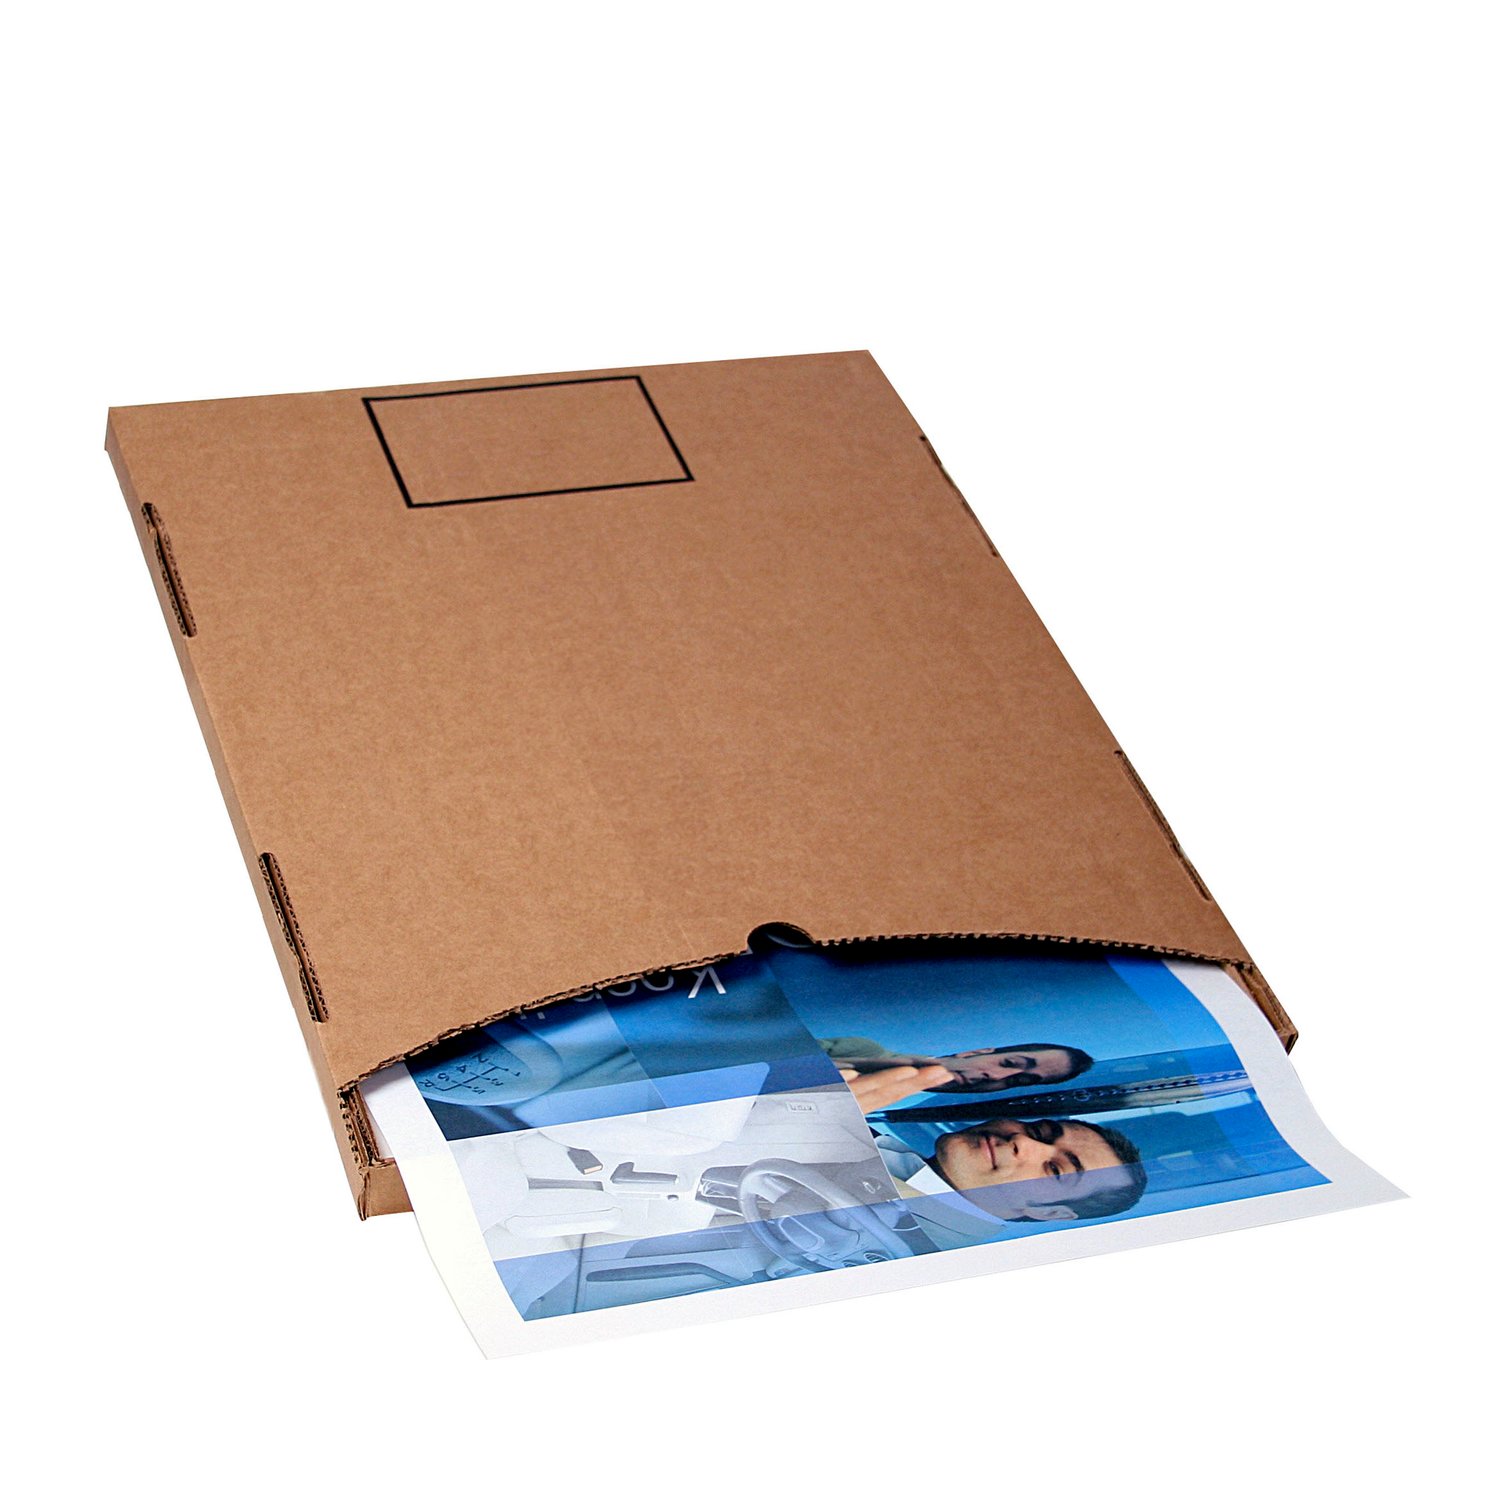 7010364272 - 3M Interior Protection Automotive Floor Mat, 36901, 250 per box, 1 box
per case